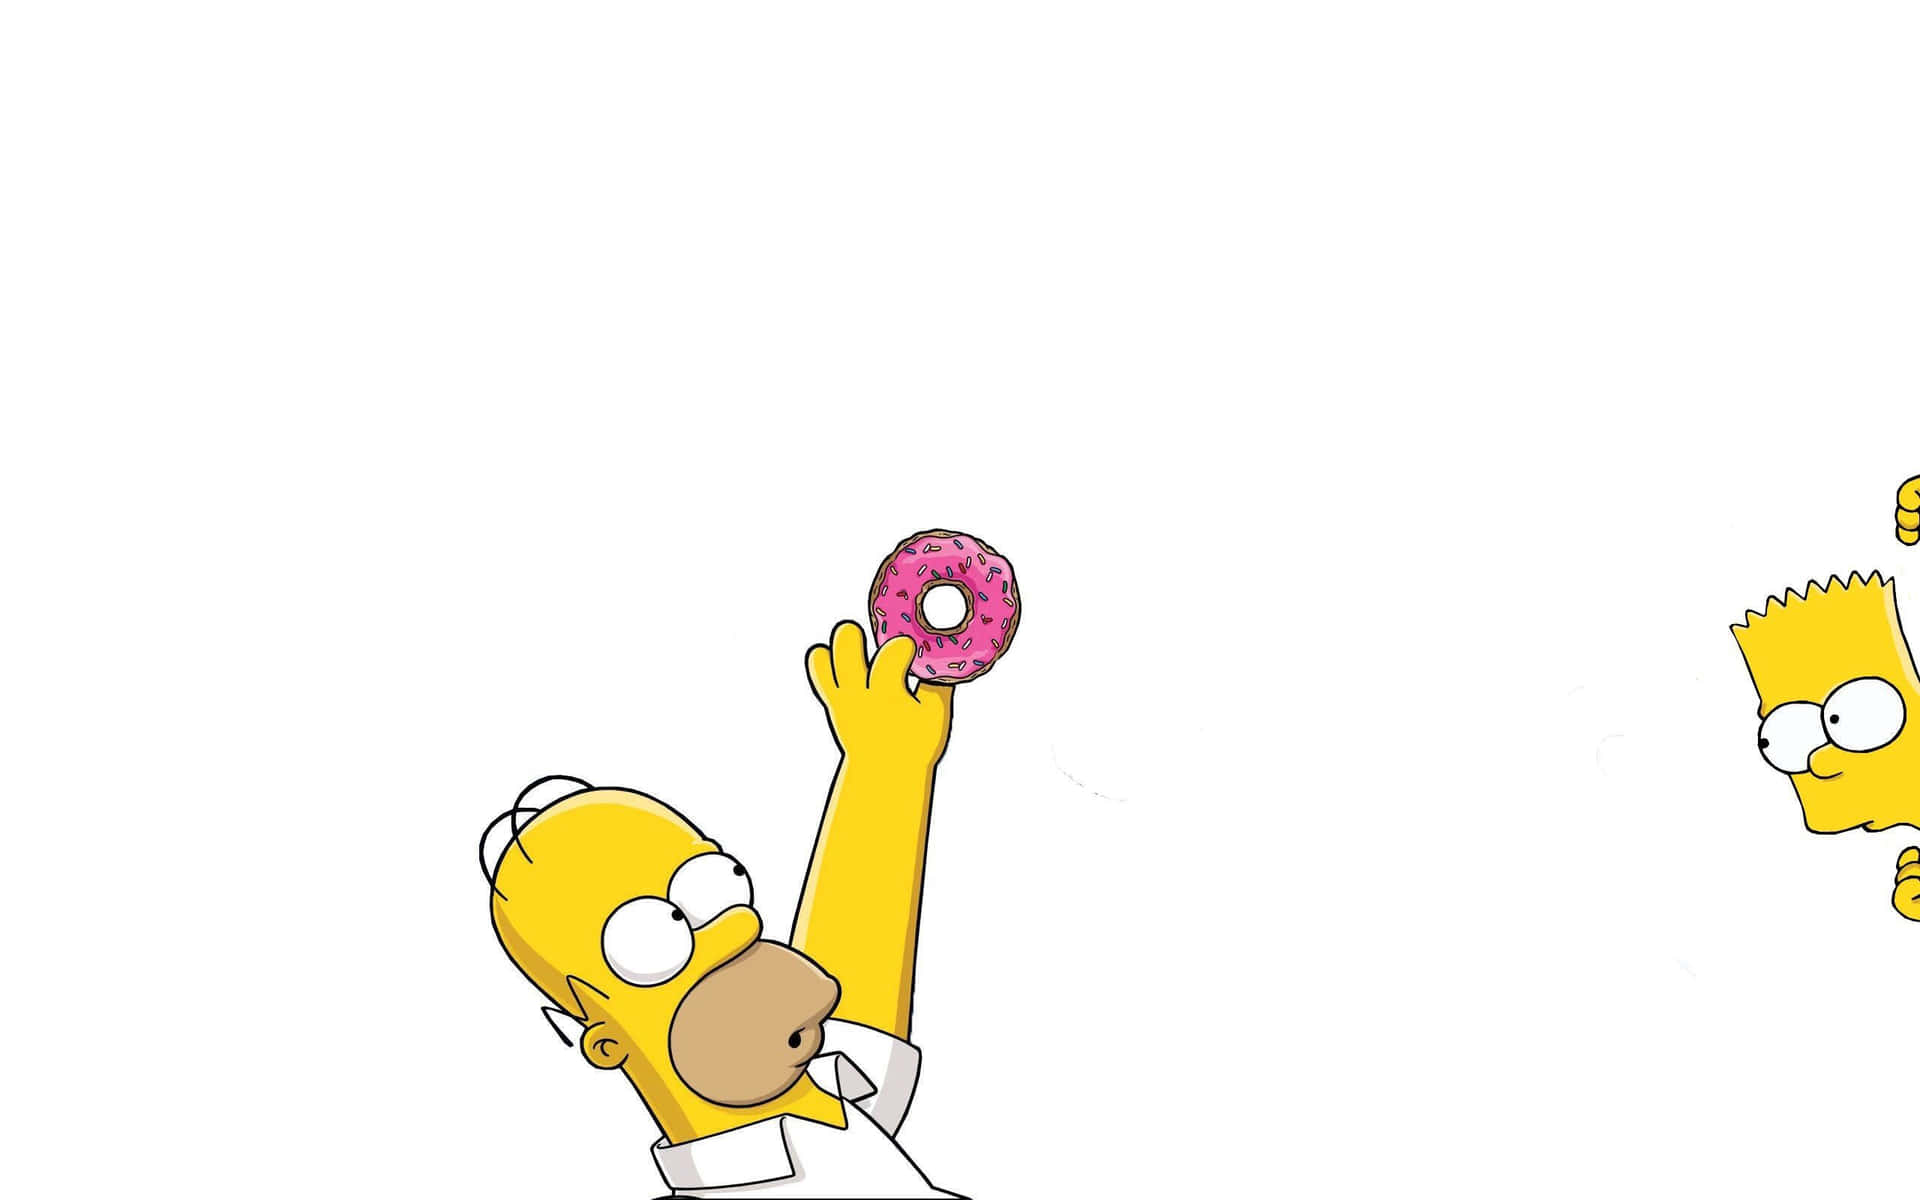 100+] Depressed Bart Simpson Wallpapers